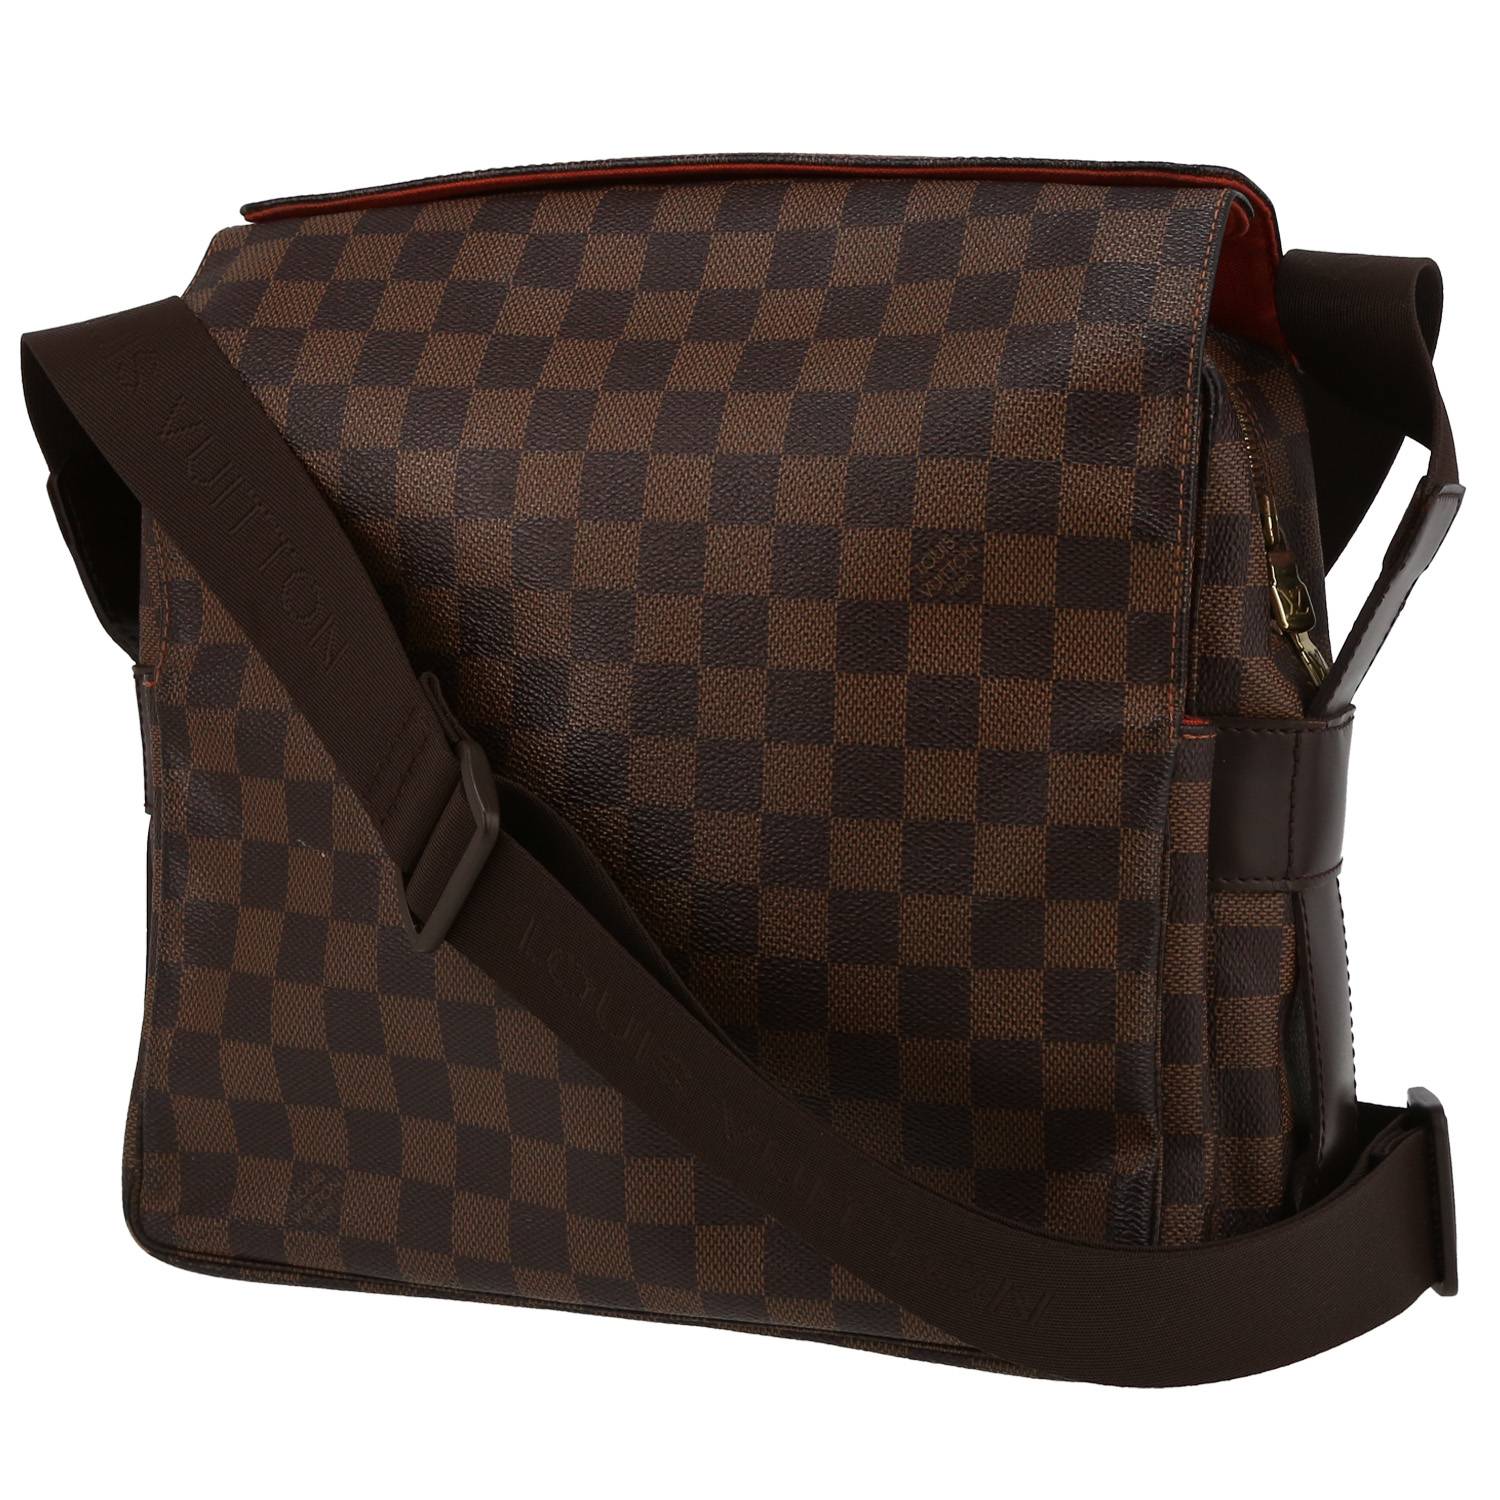 Louis Vuitton Naviglio Shoulder Bag in Ebene Damier Canvas and